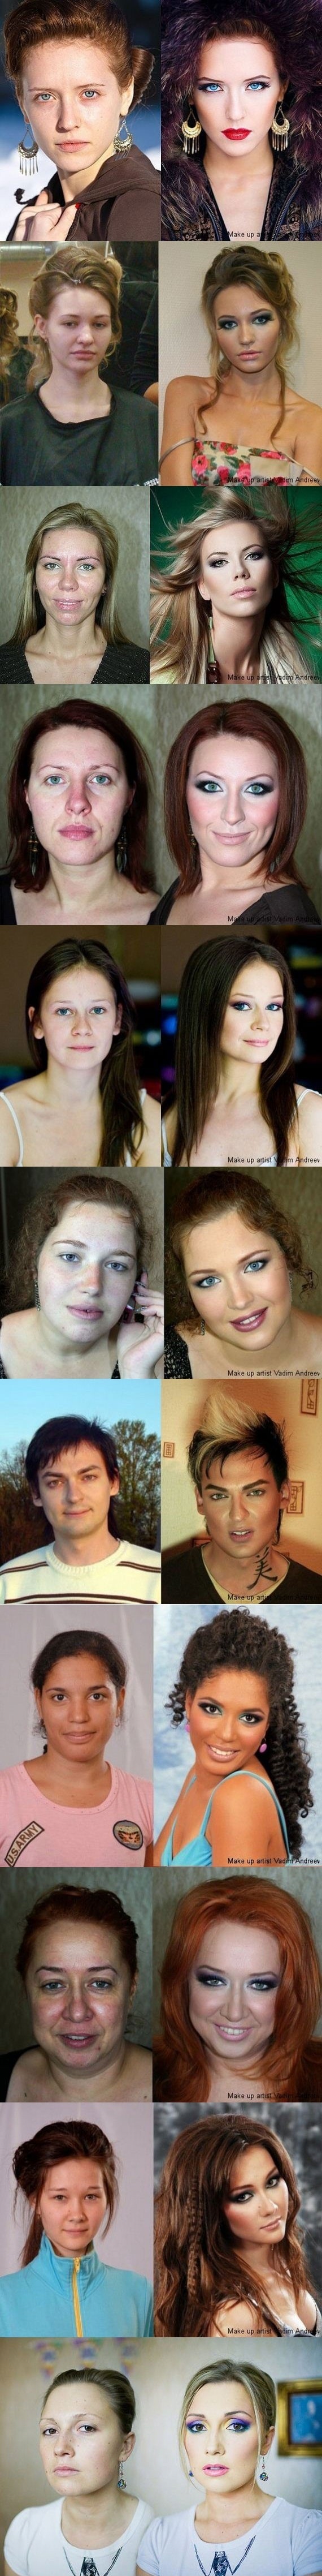 True power of make up.